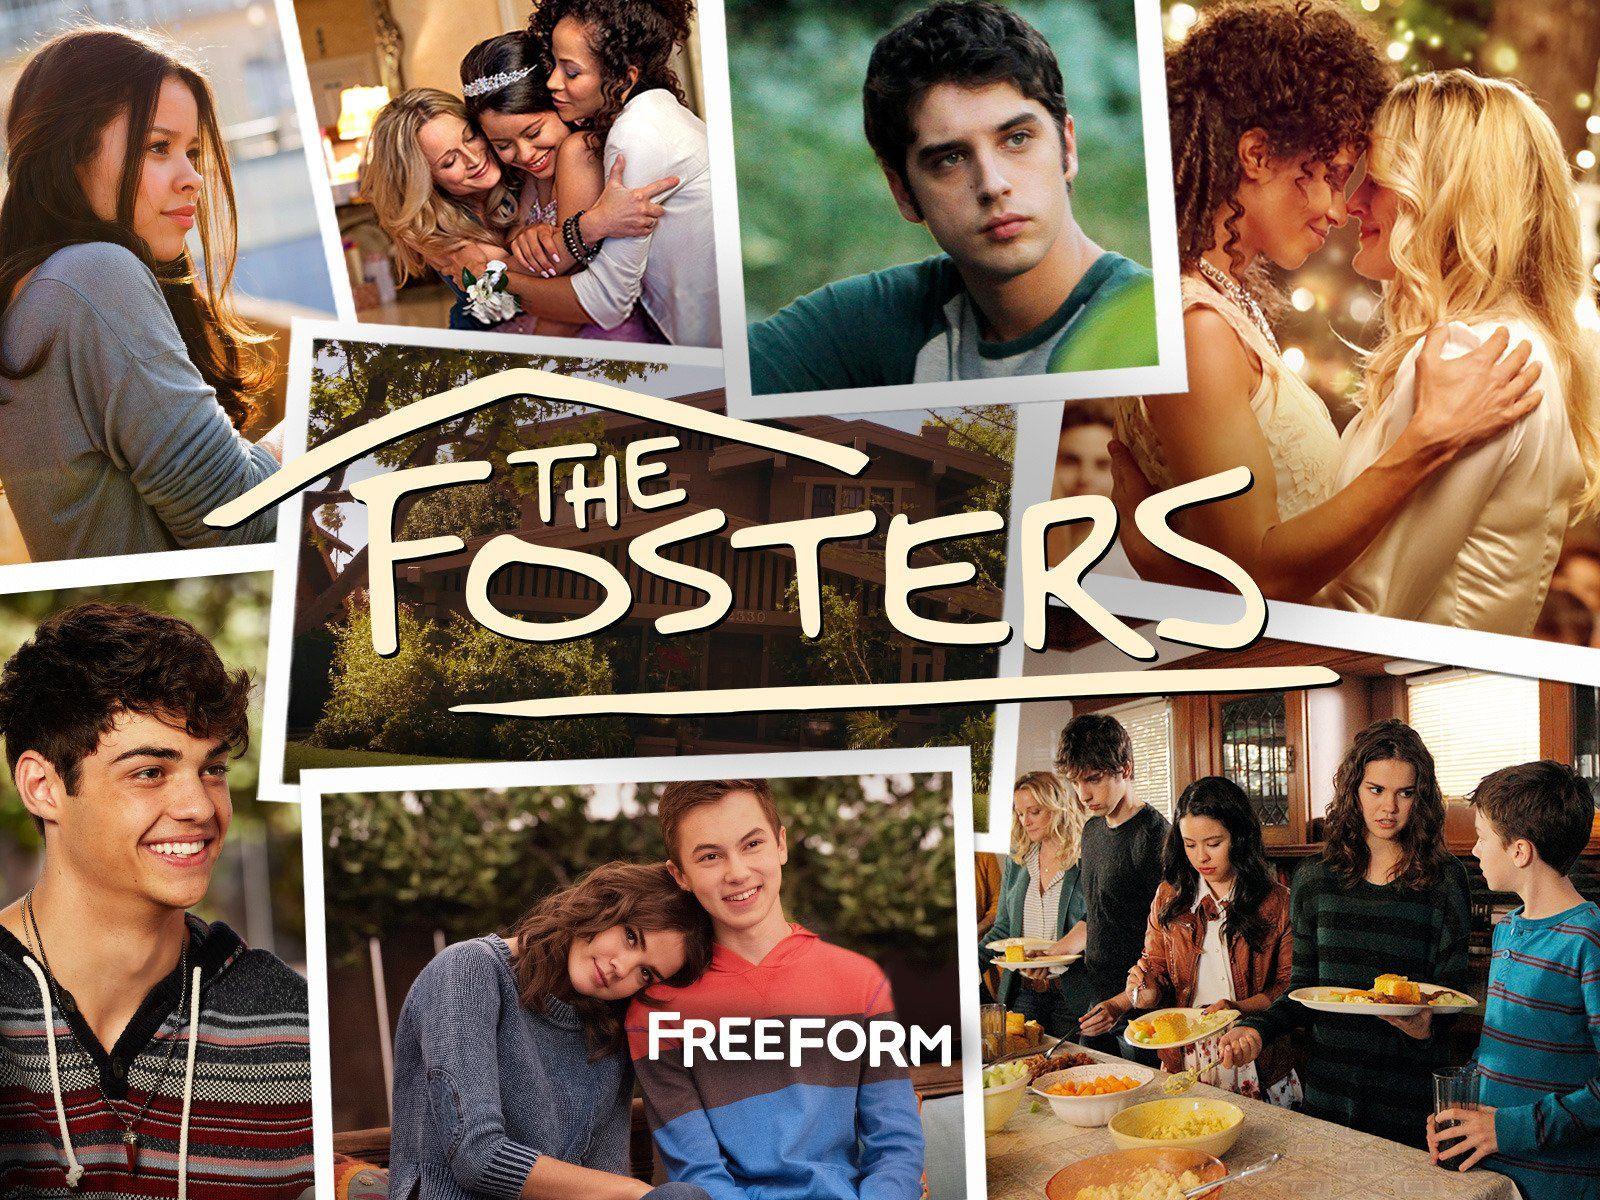 The Fosters Season 1: Amazon Digital Services LLC